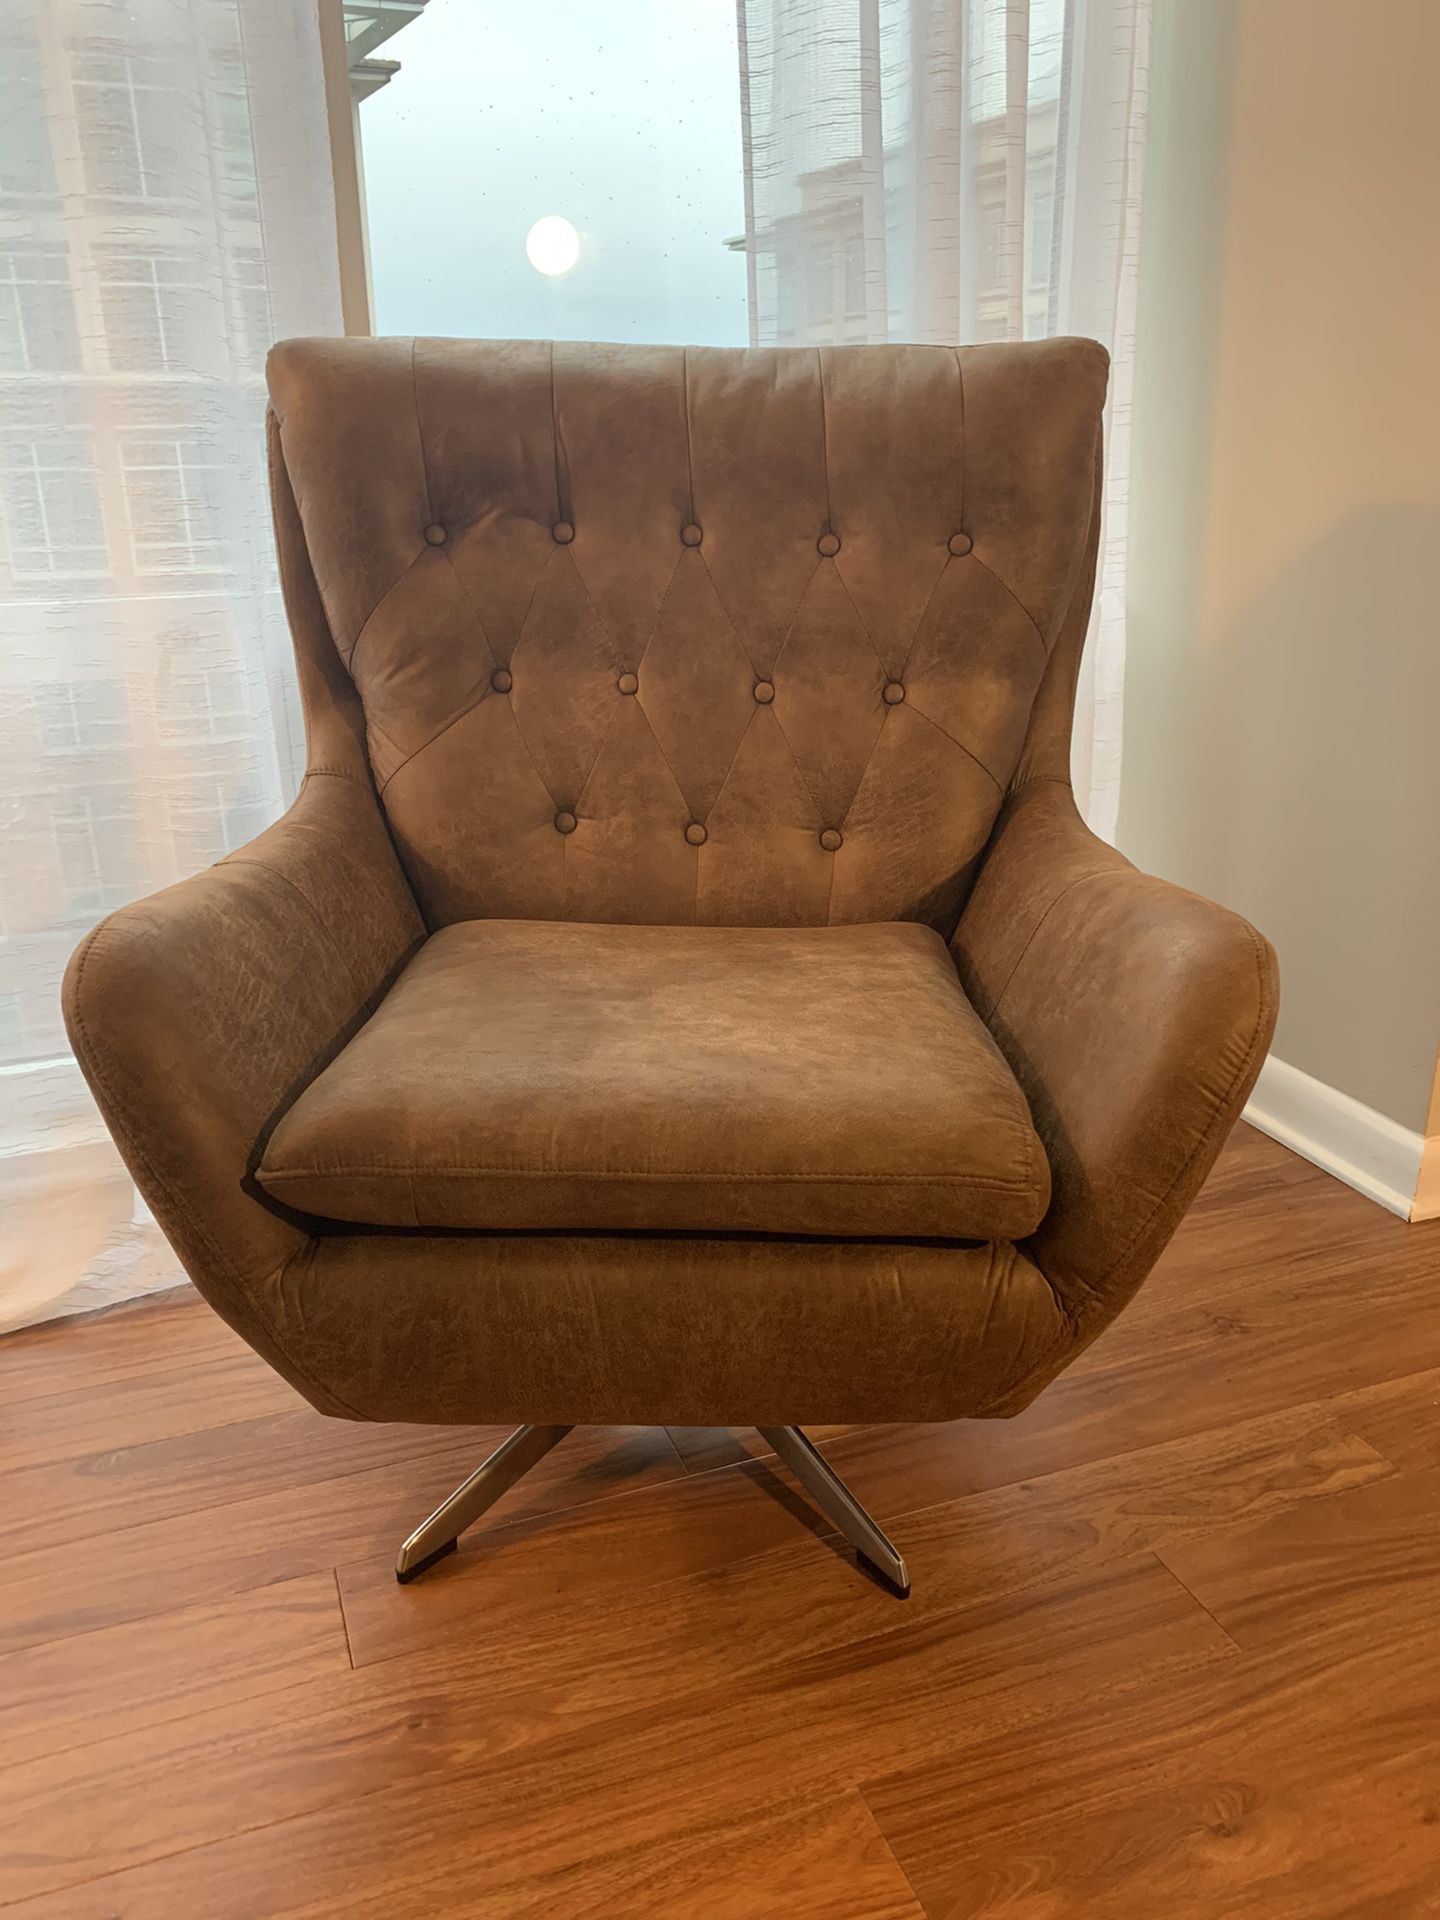 Velburg accent chair - original price $676.71